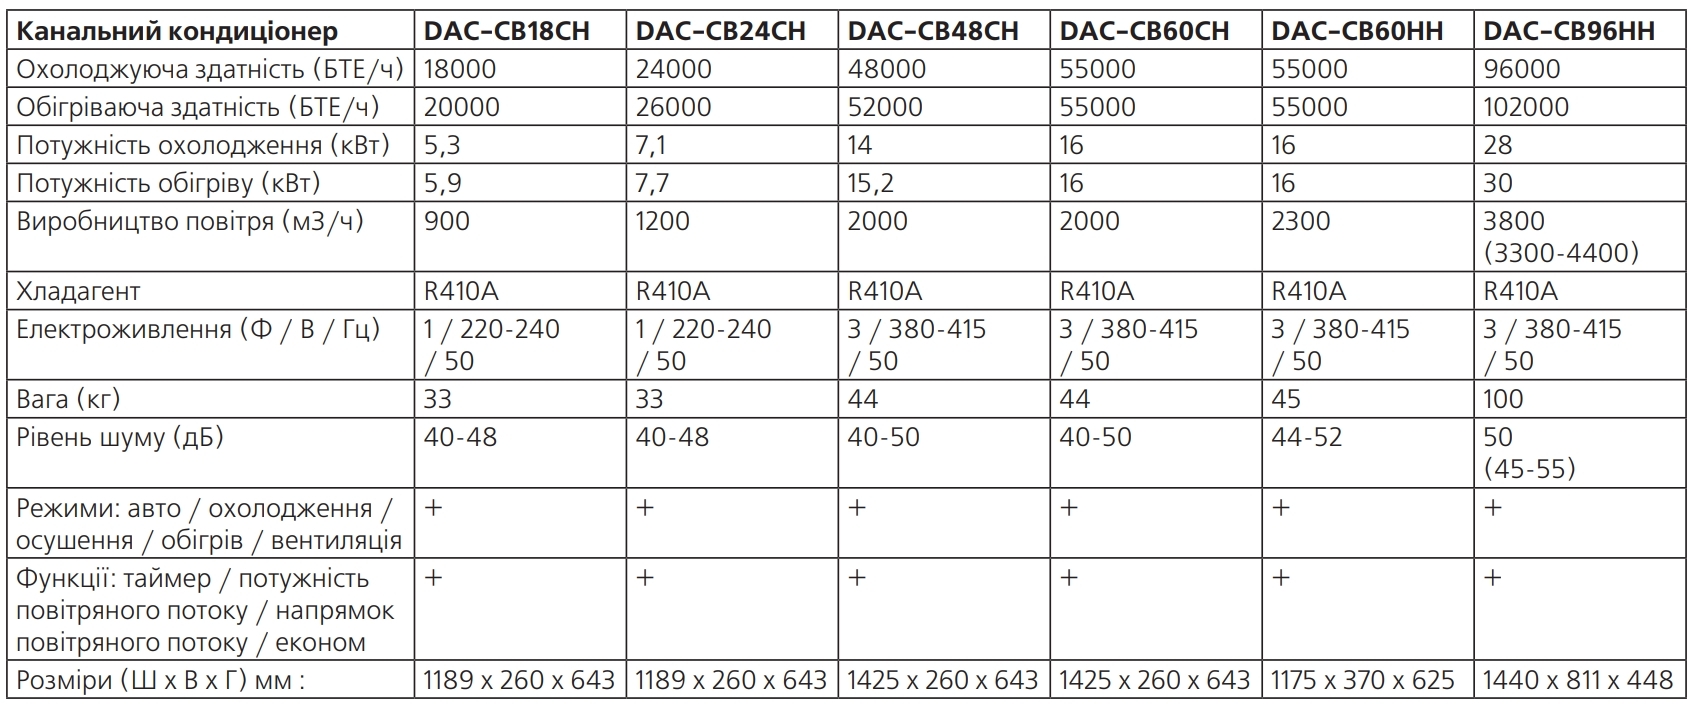 Digital DAC-CB96HH Характеристики